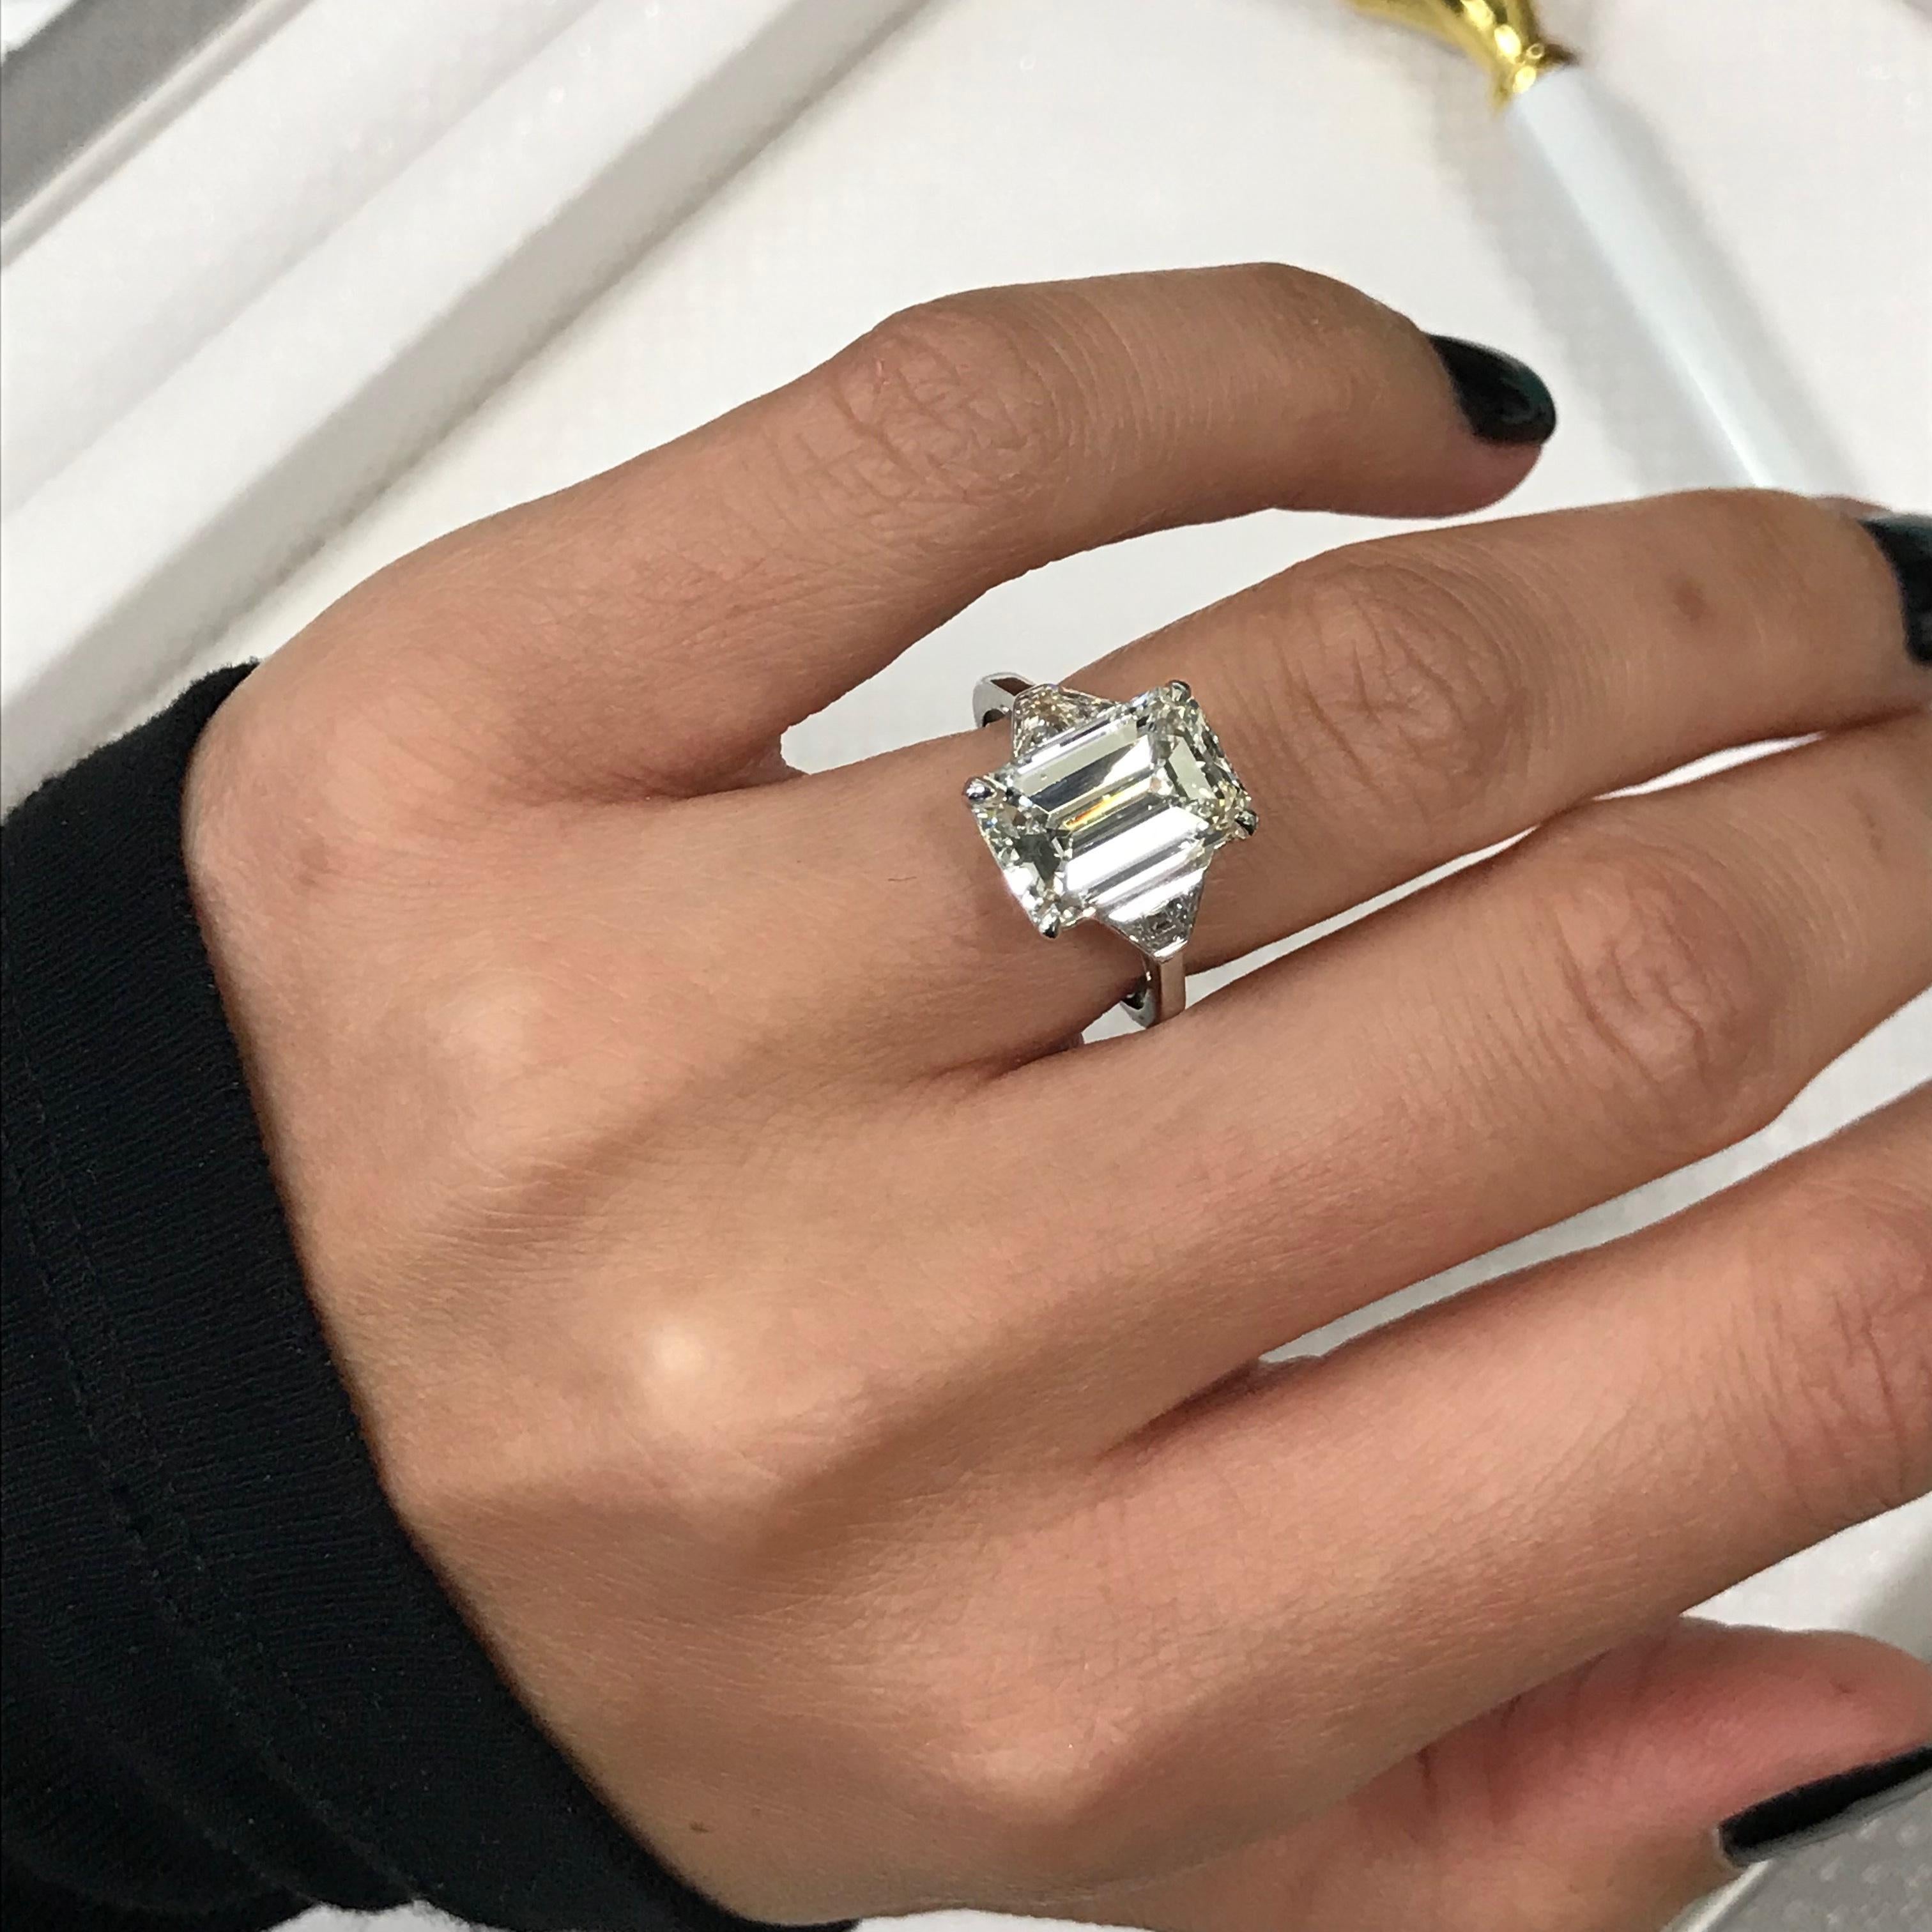 3 carat emerald cut engagement ring